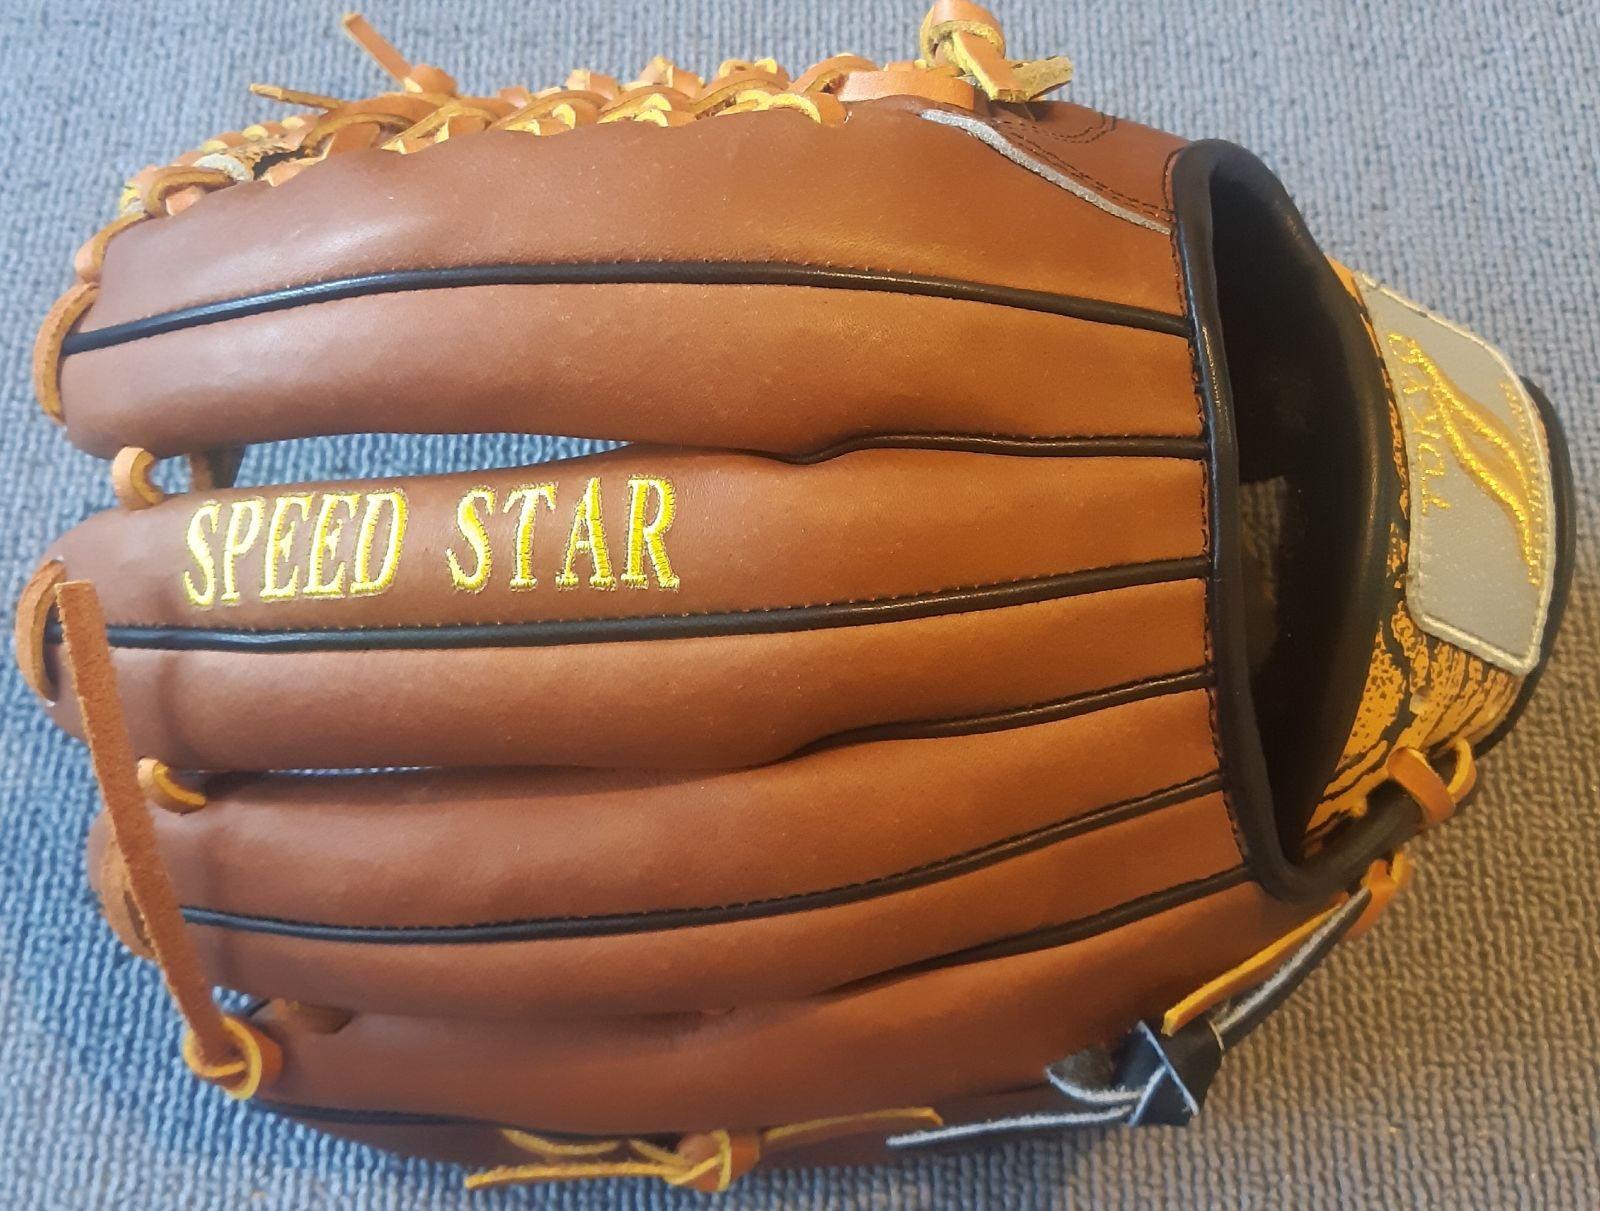 SPEED STAR 野球内野手用グローブ 右投げ SS-T6SAKAH ブラウン×タイガー 限定 - メルカリ